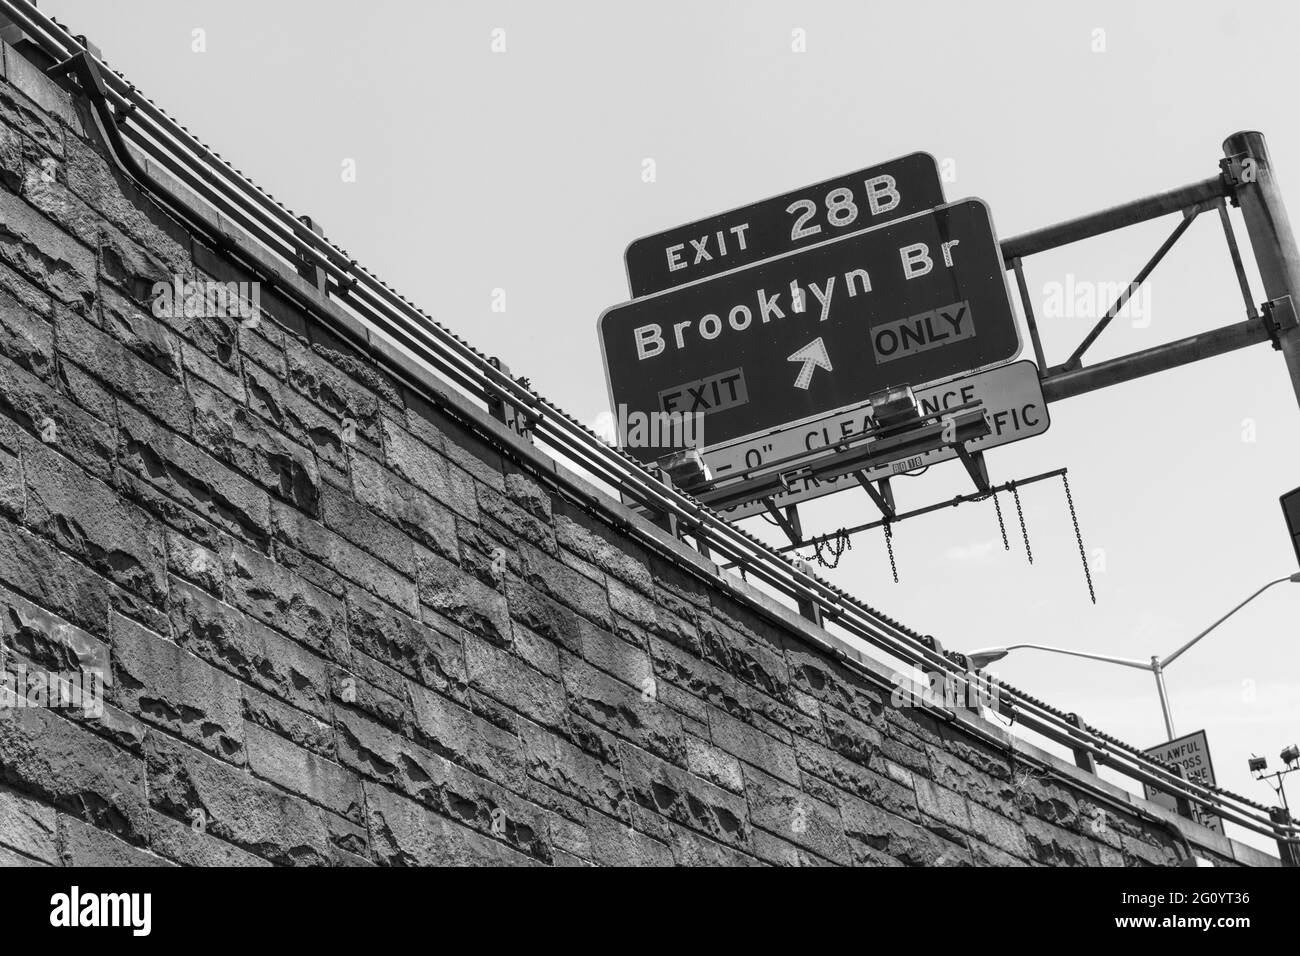 Panneau de sortie, pont de Brooklyn, Brooklyn, New York, États-Unis Banque D'Images